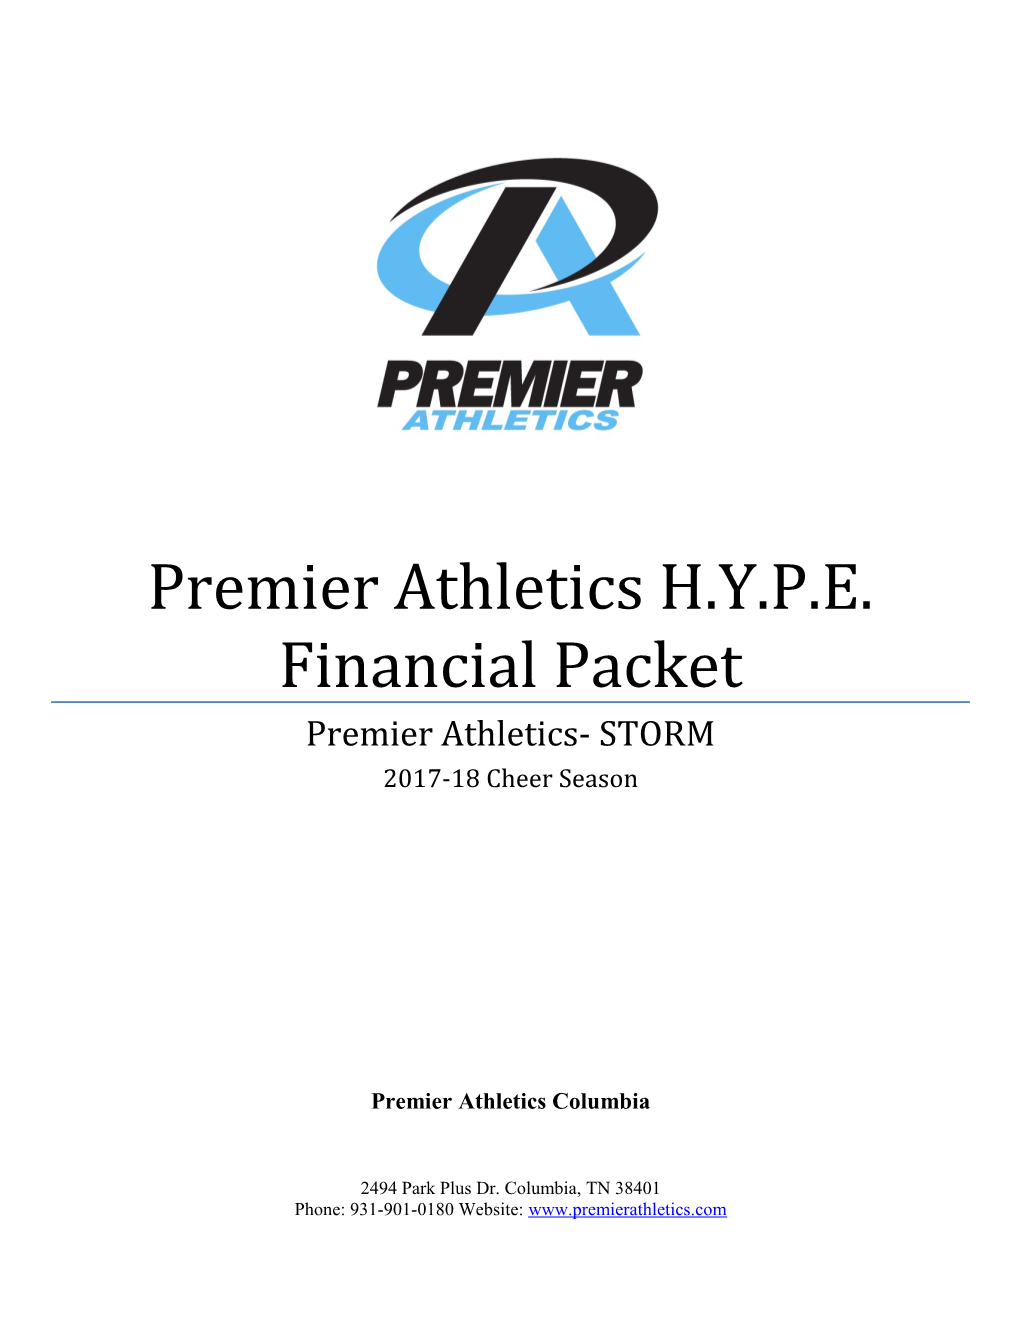 Premier Athletics H.Y.P.E. Financial Packet